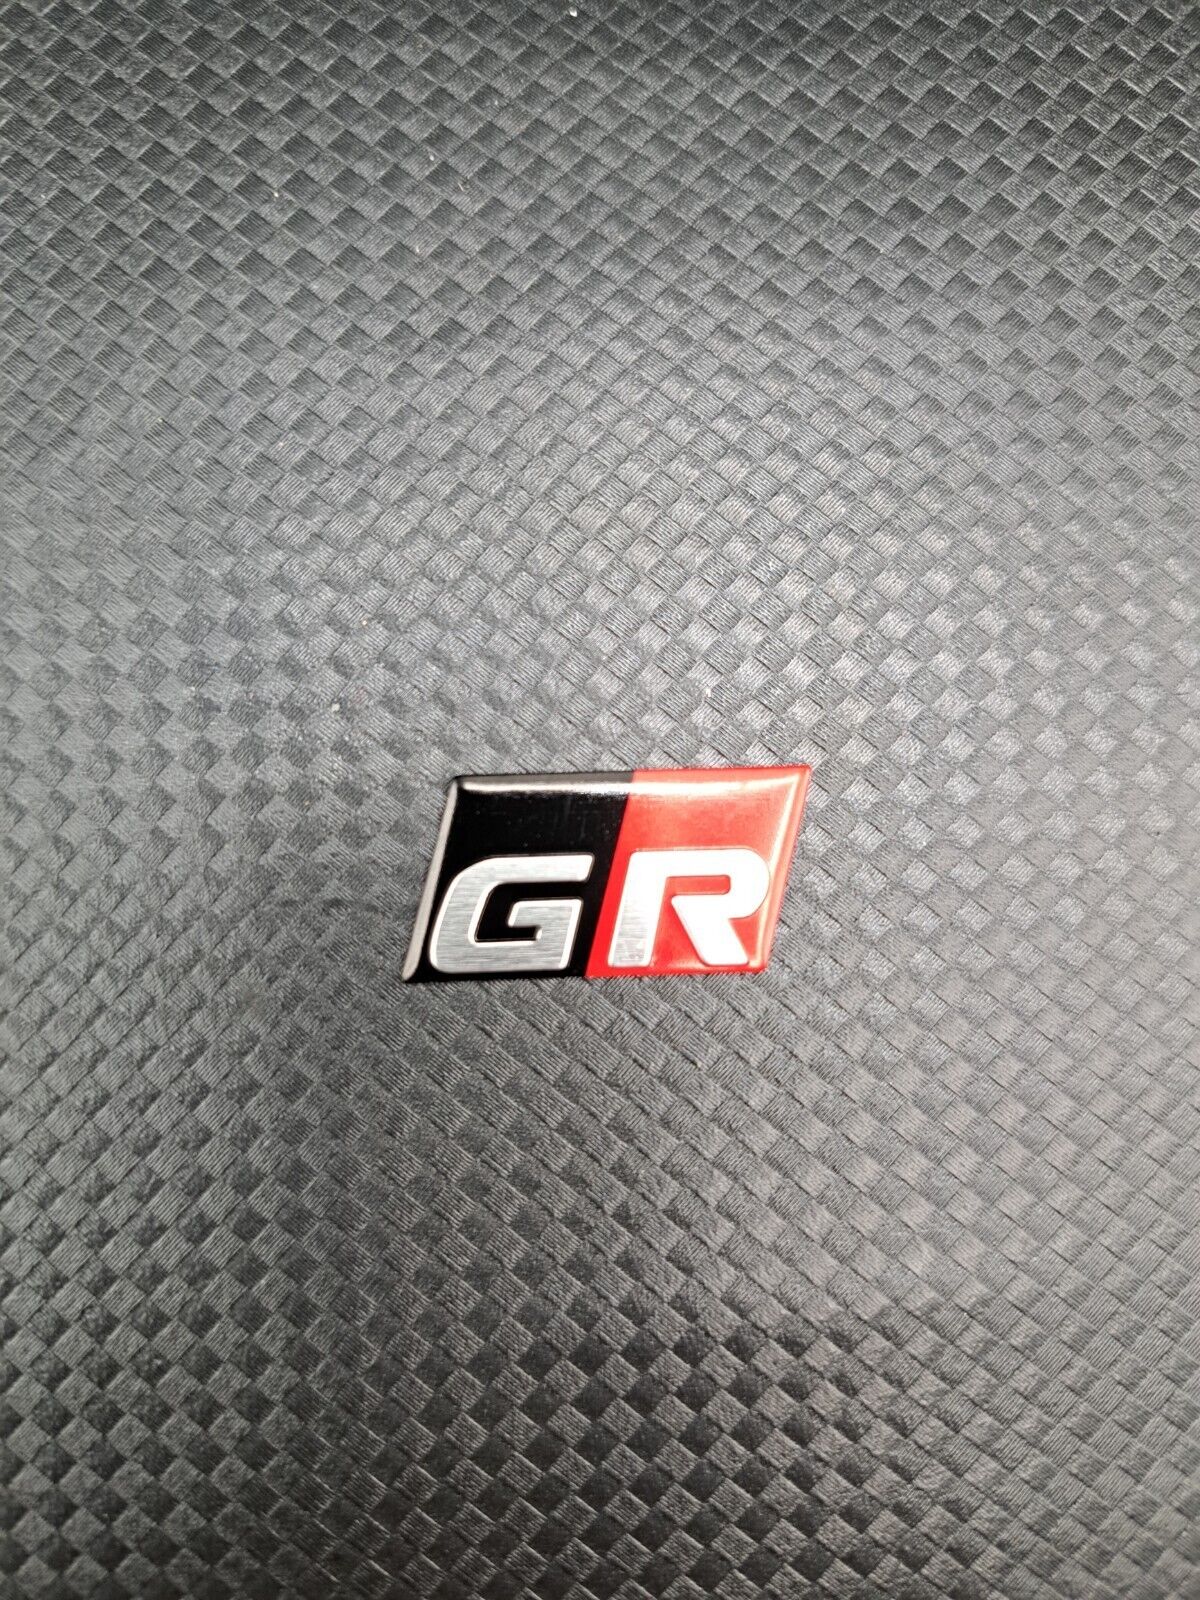 stainless Toyota Gazoo Racing Genuine GR Emblem Badge Grill JDM OEM Brushed